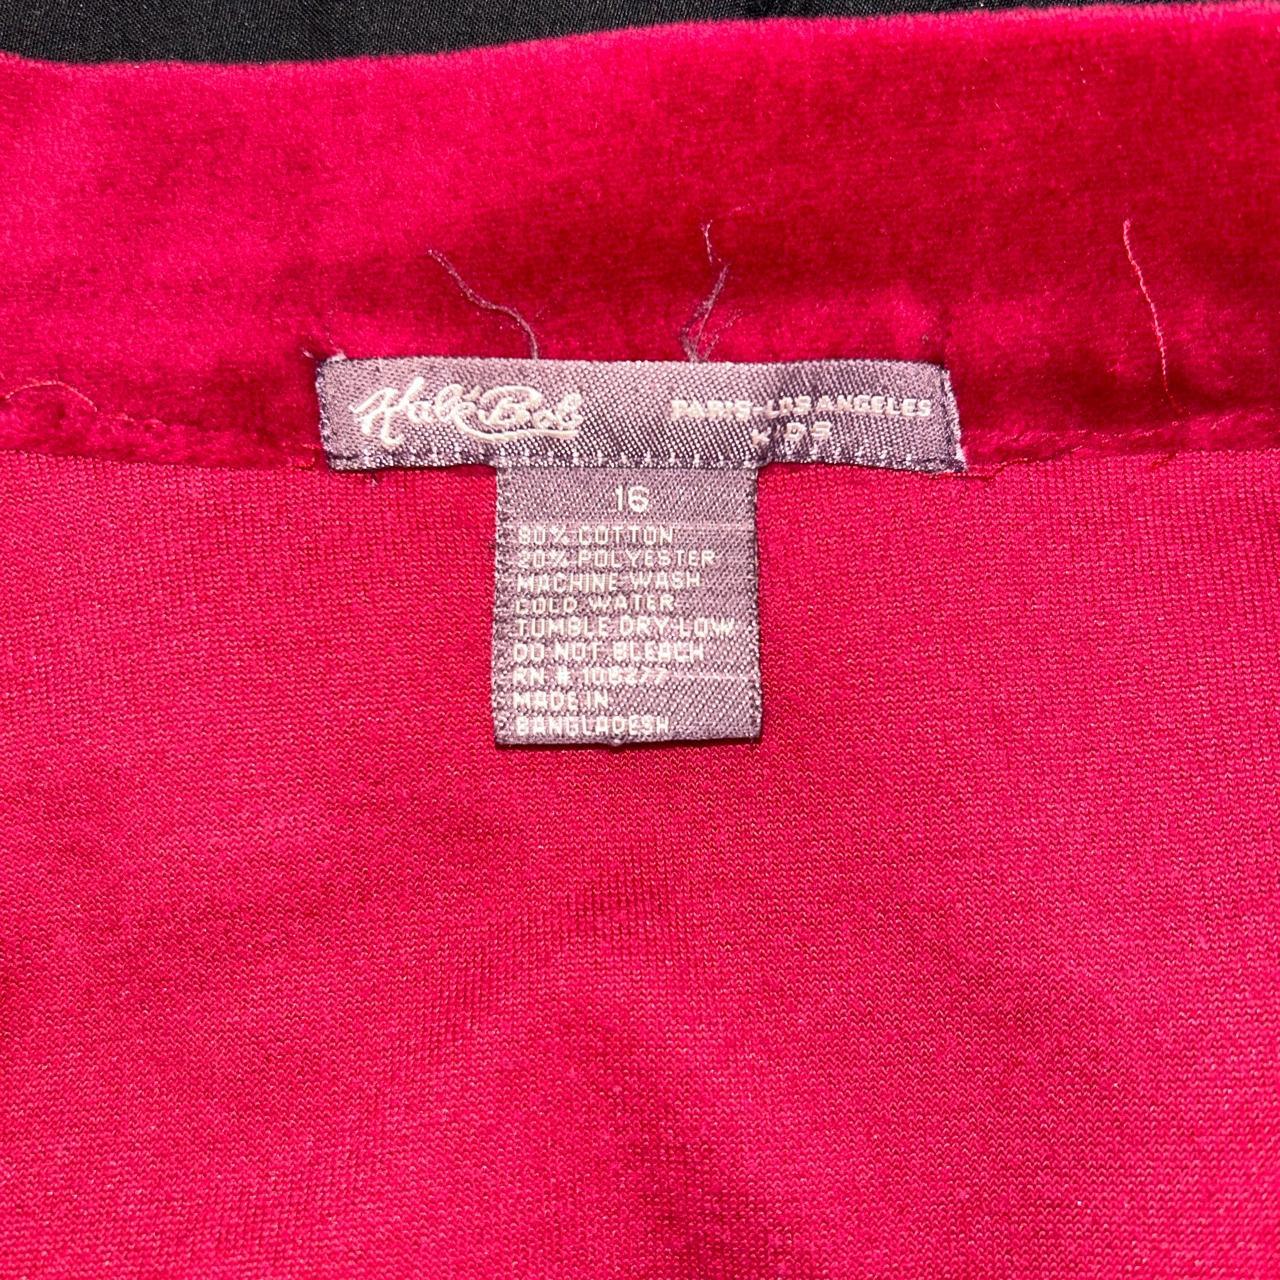 hale bob red bomber jacket 🍒 ️ tagged kids 16 // XS-S - Depop